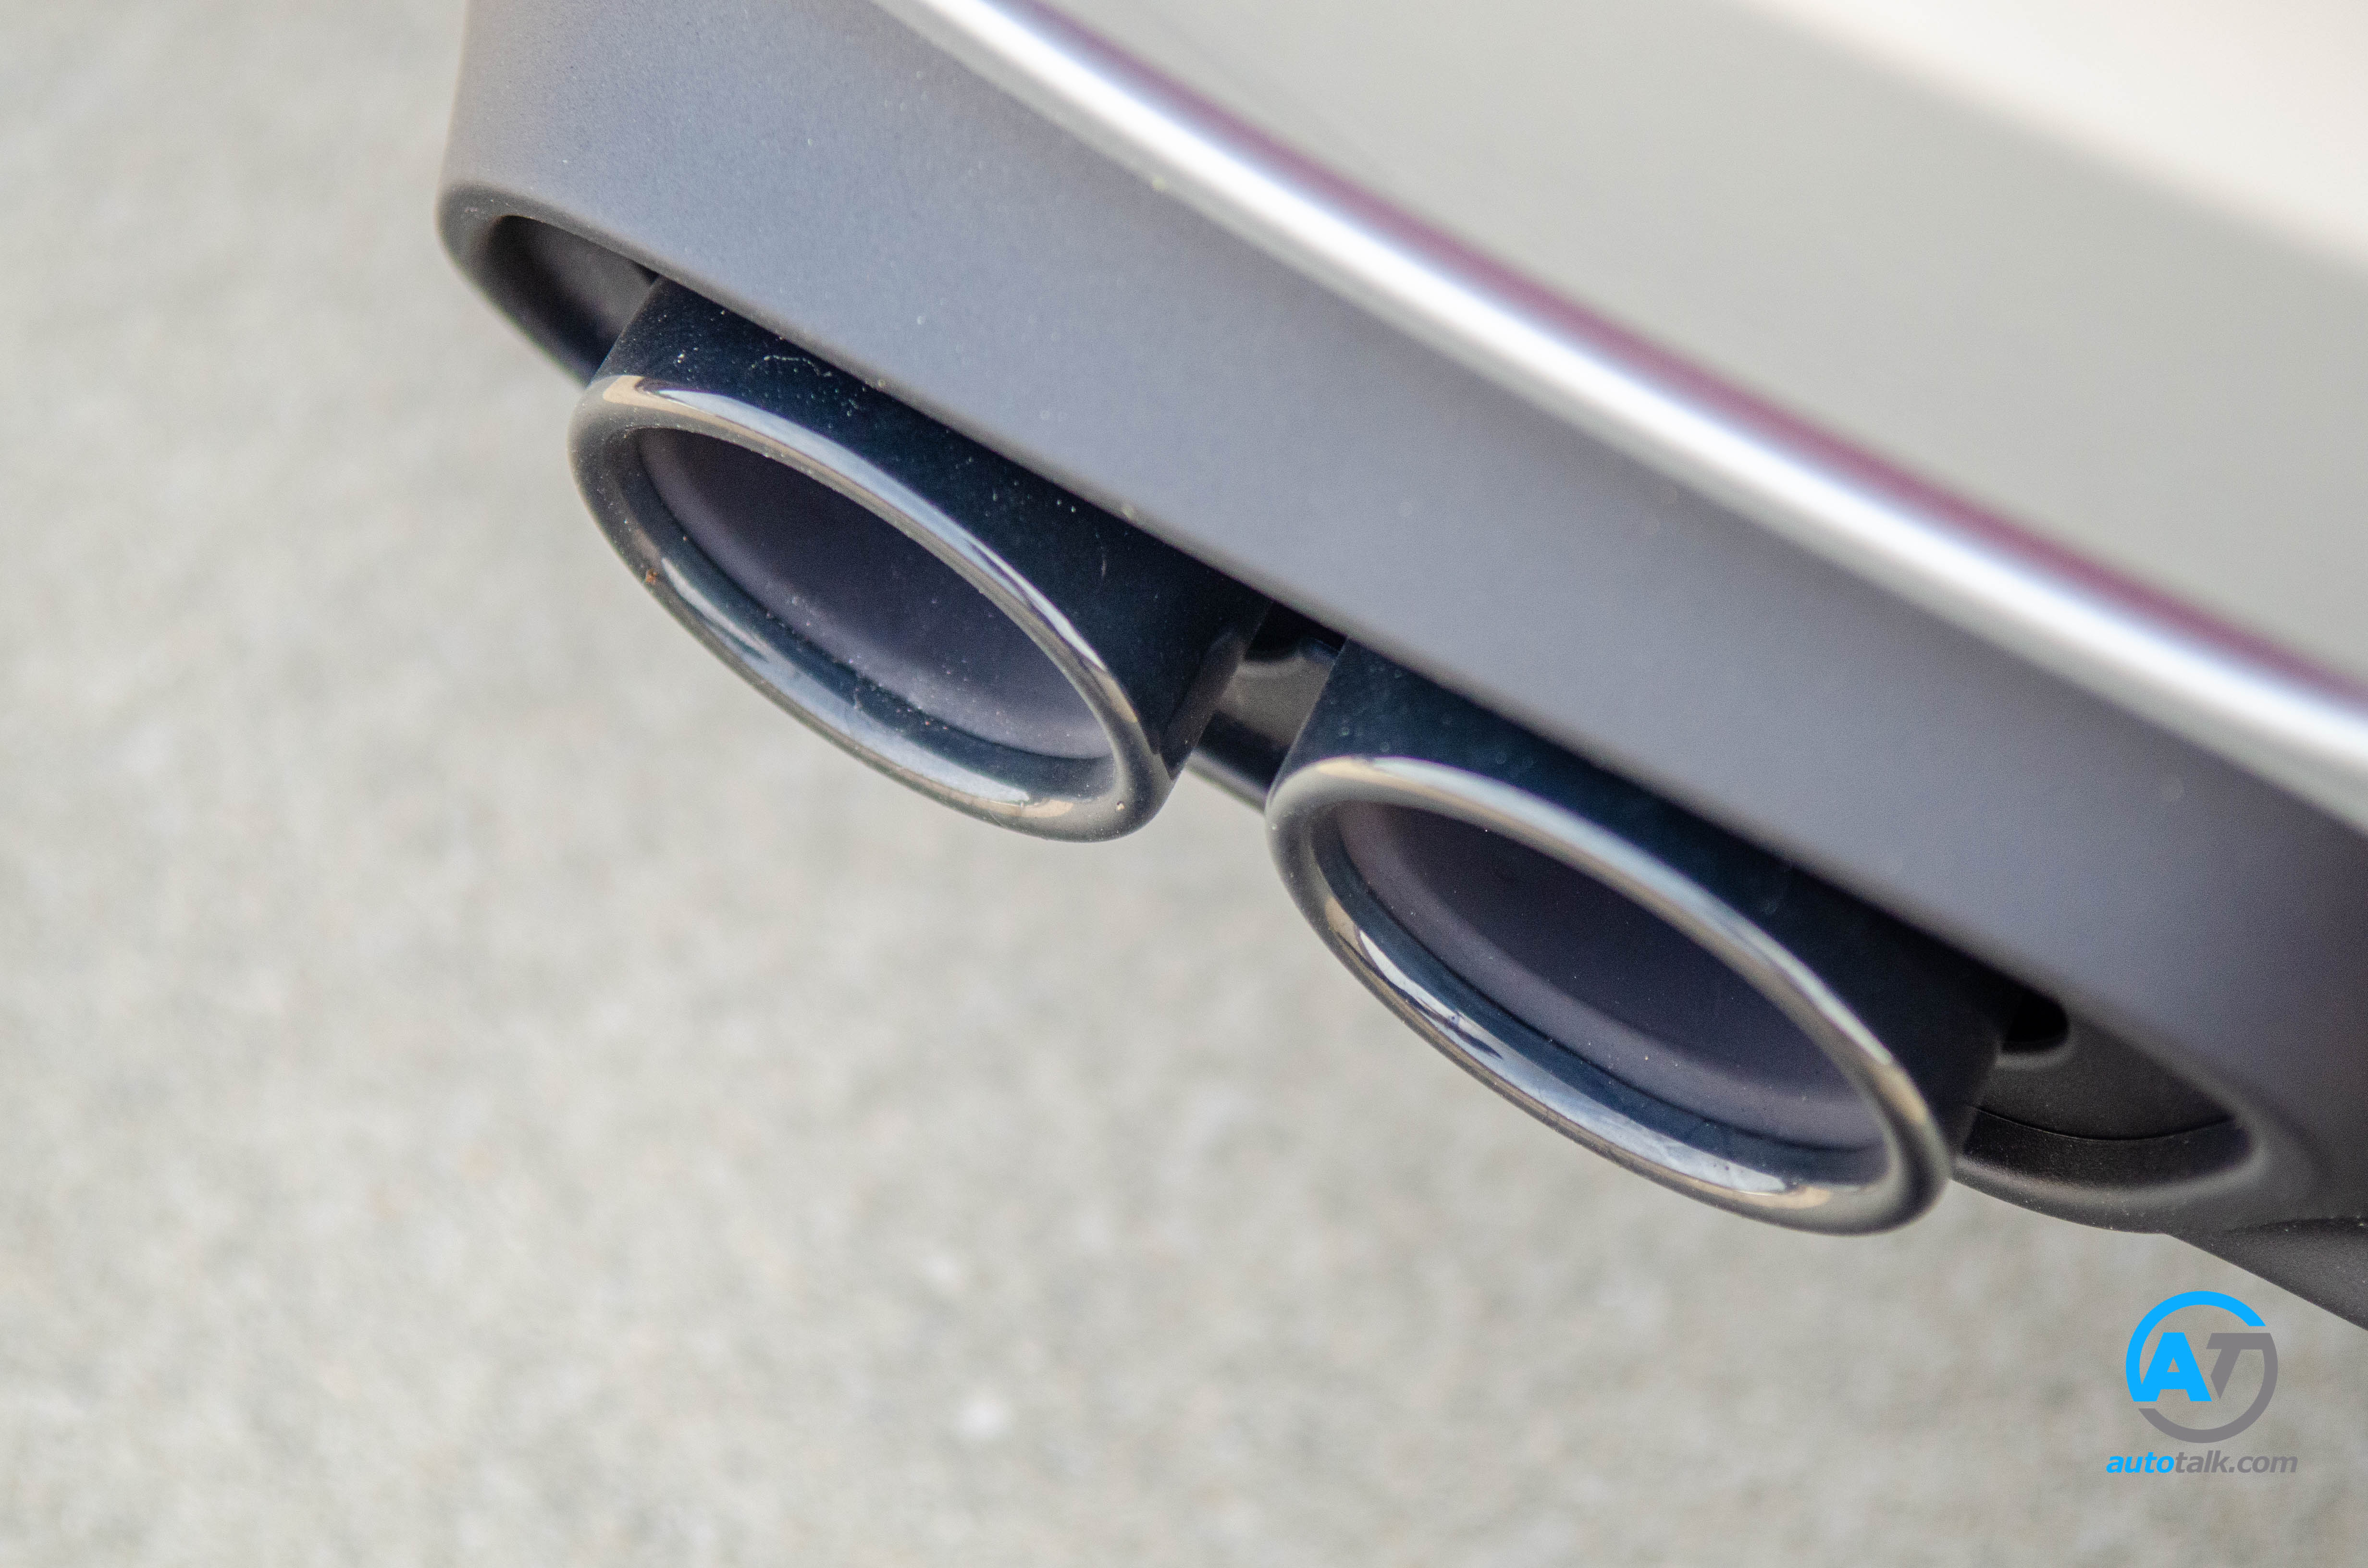 2020 Mercedes-Benz AMG GT Review